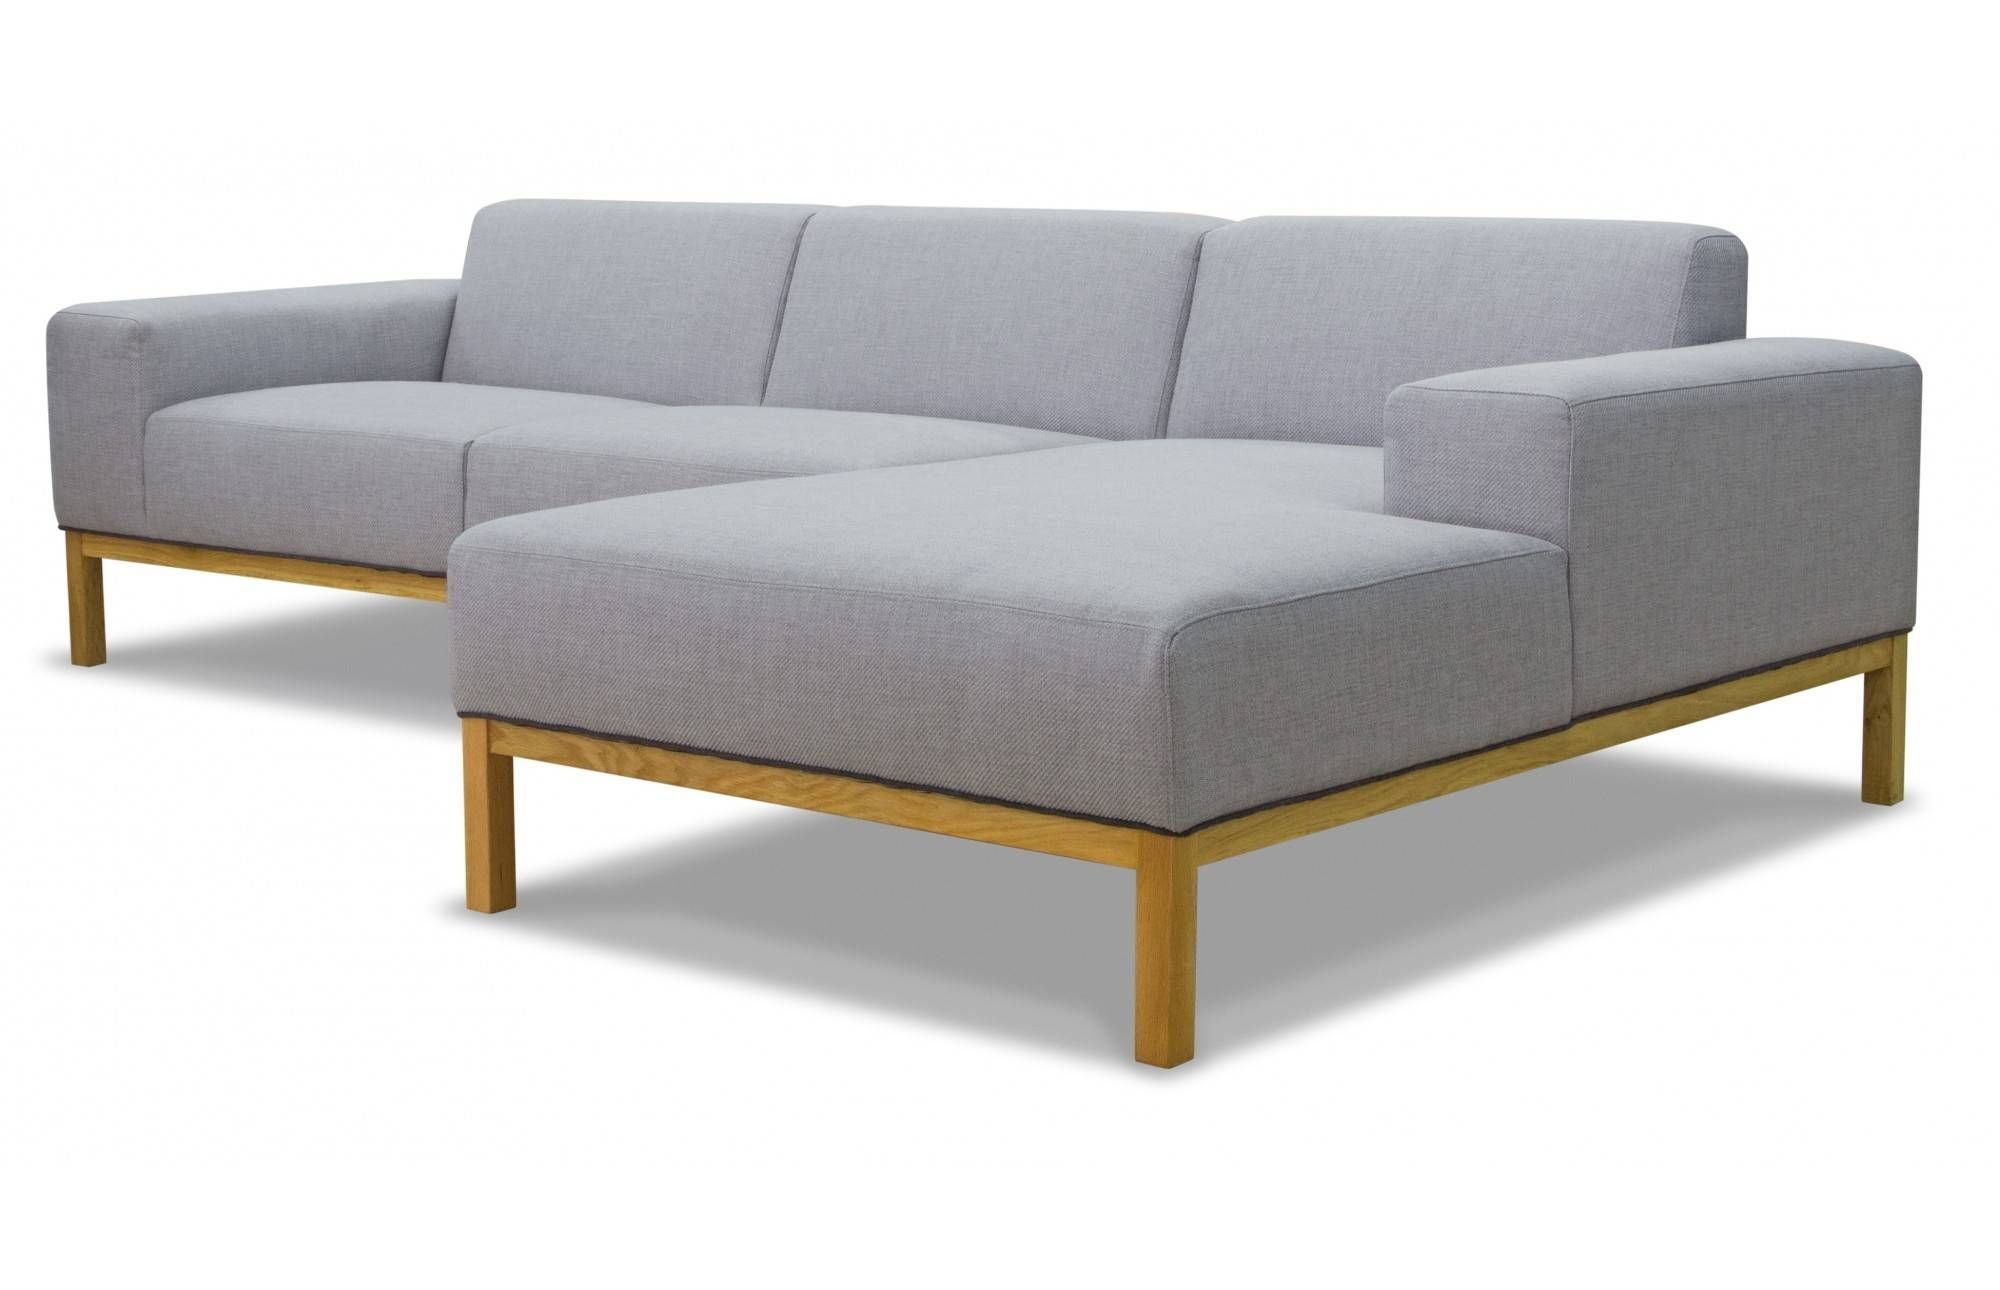 Buy Union Black Leather Modular Corner Sofas At Furniture Choice Pertaining To Modular Corner Sofas (View 2 of 30)